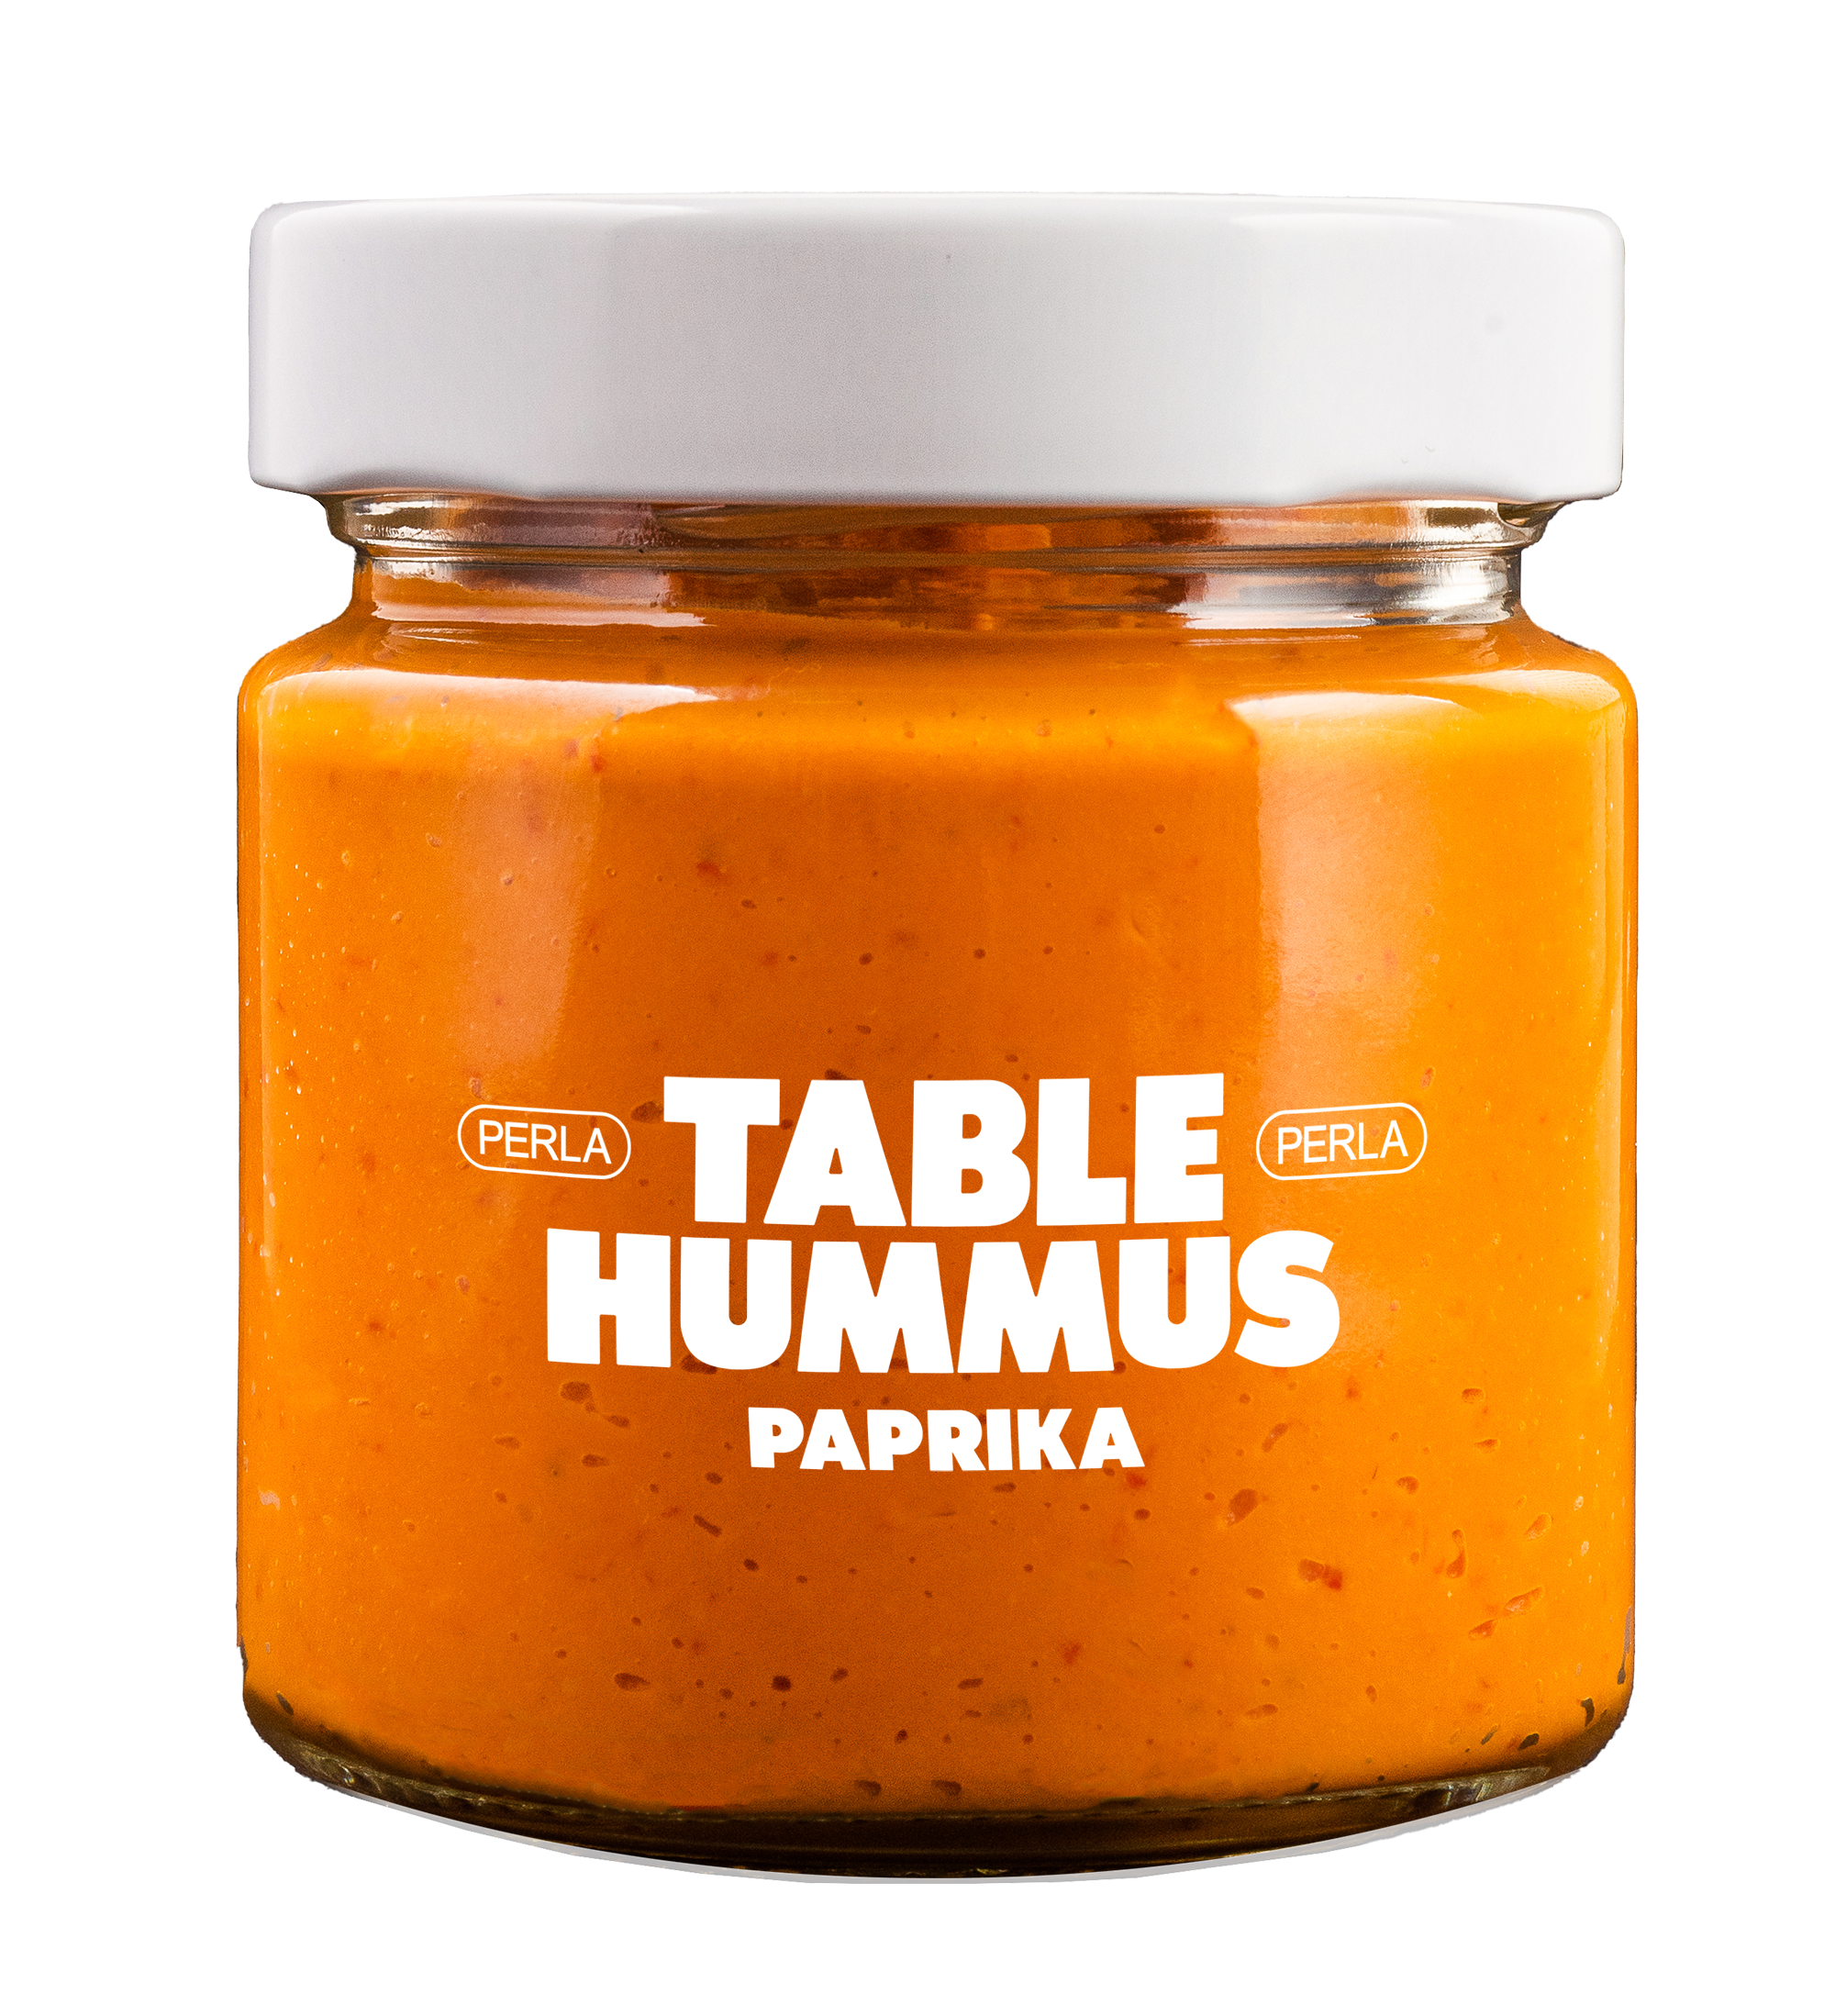 Hummus pepper in jar